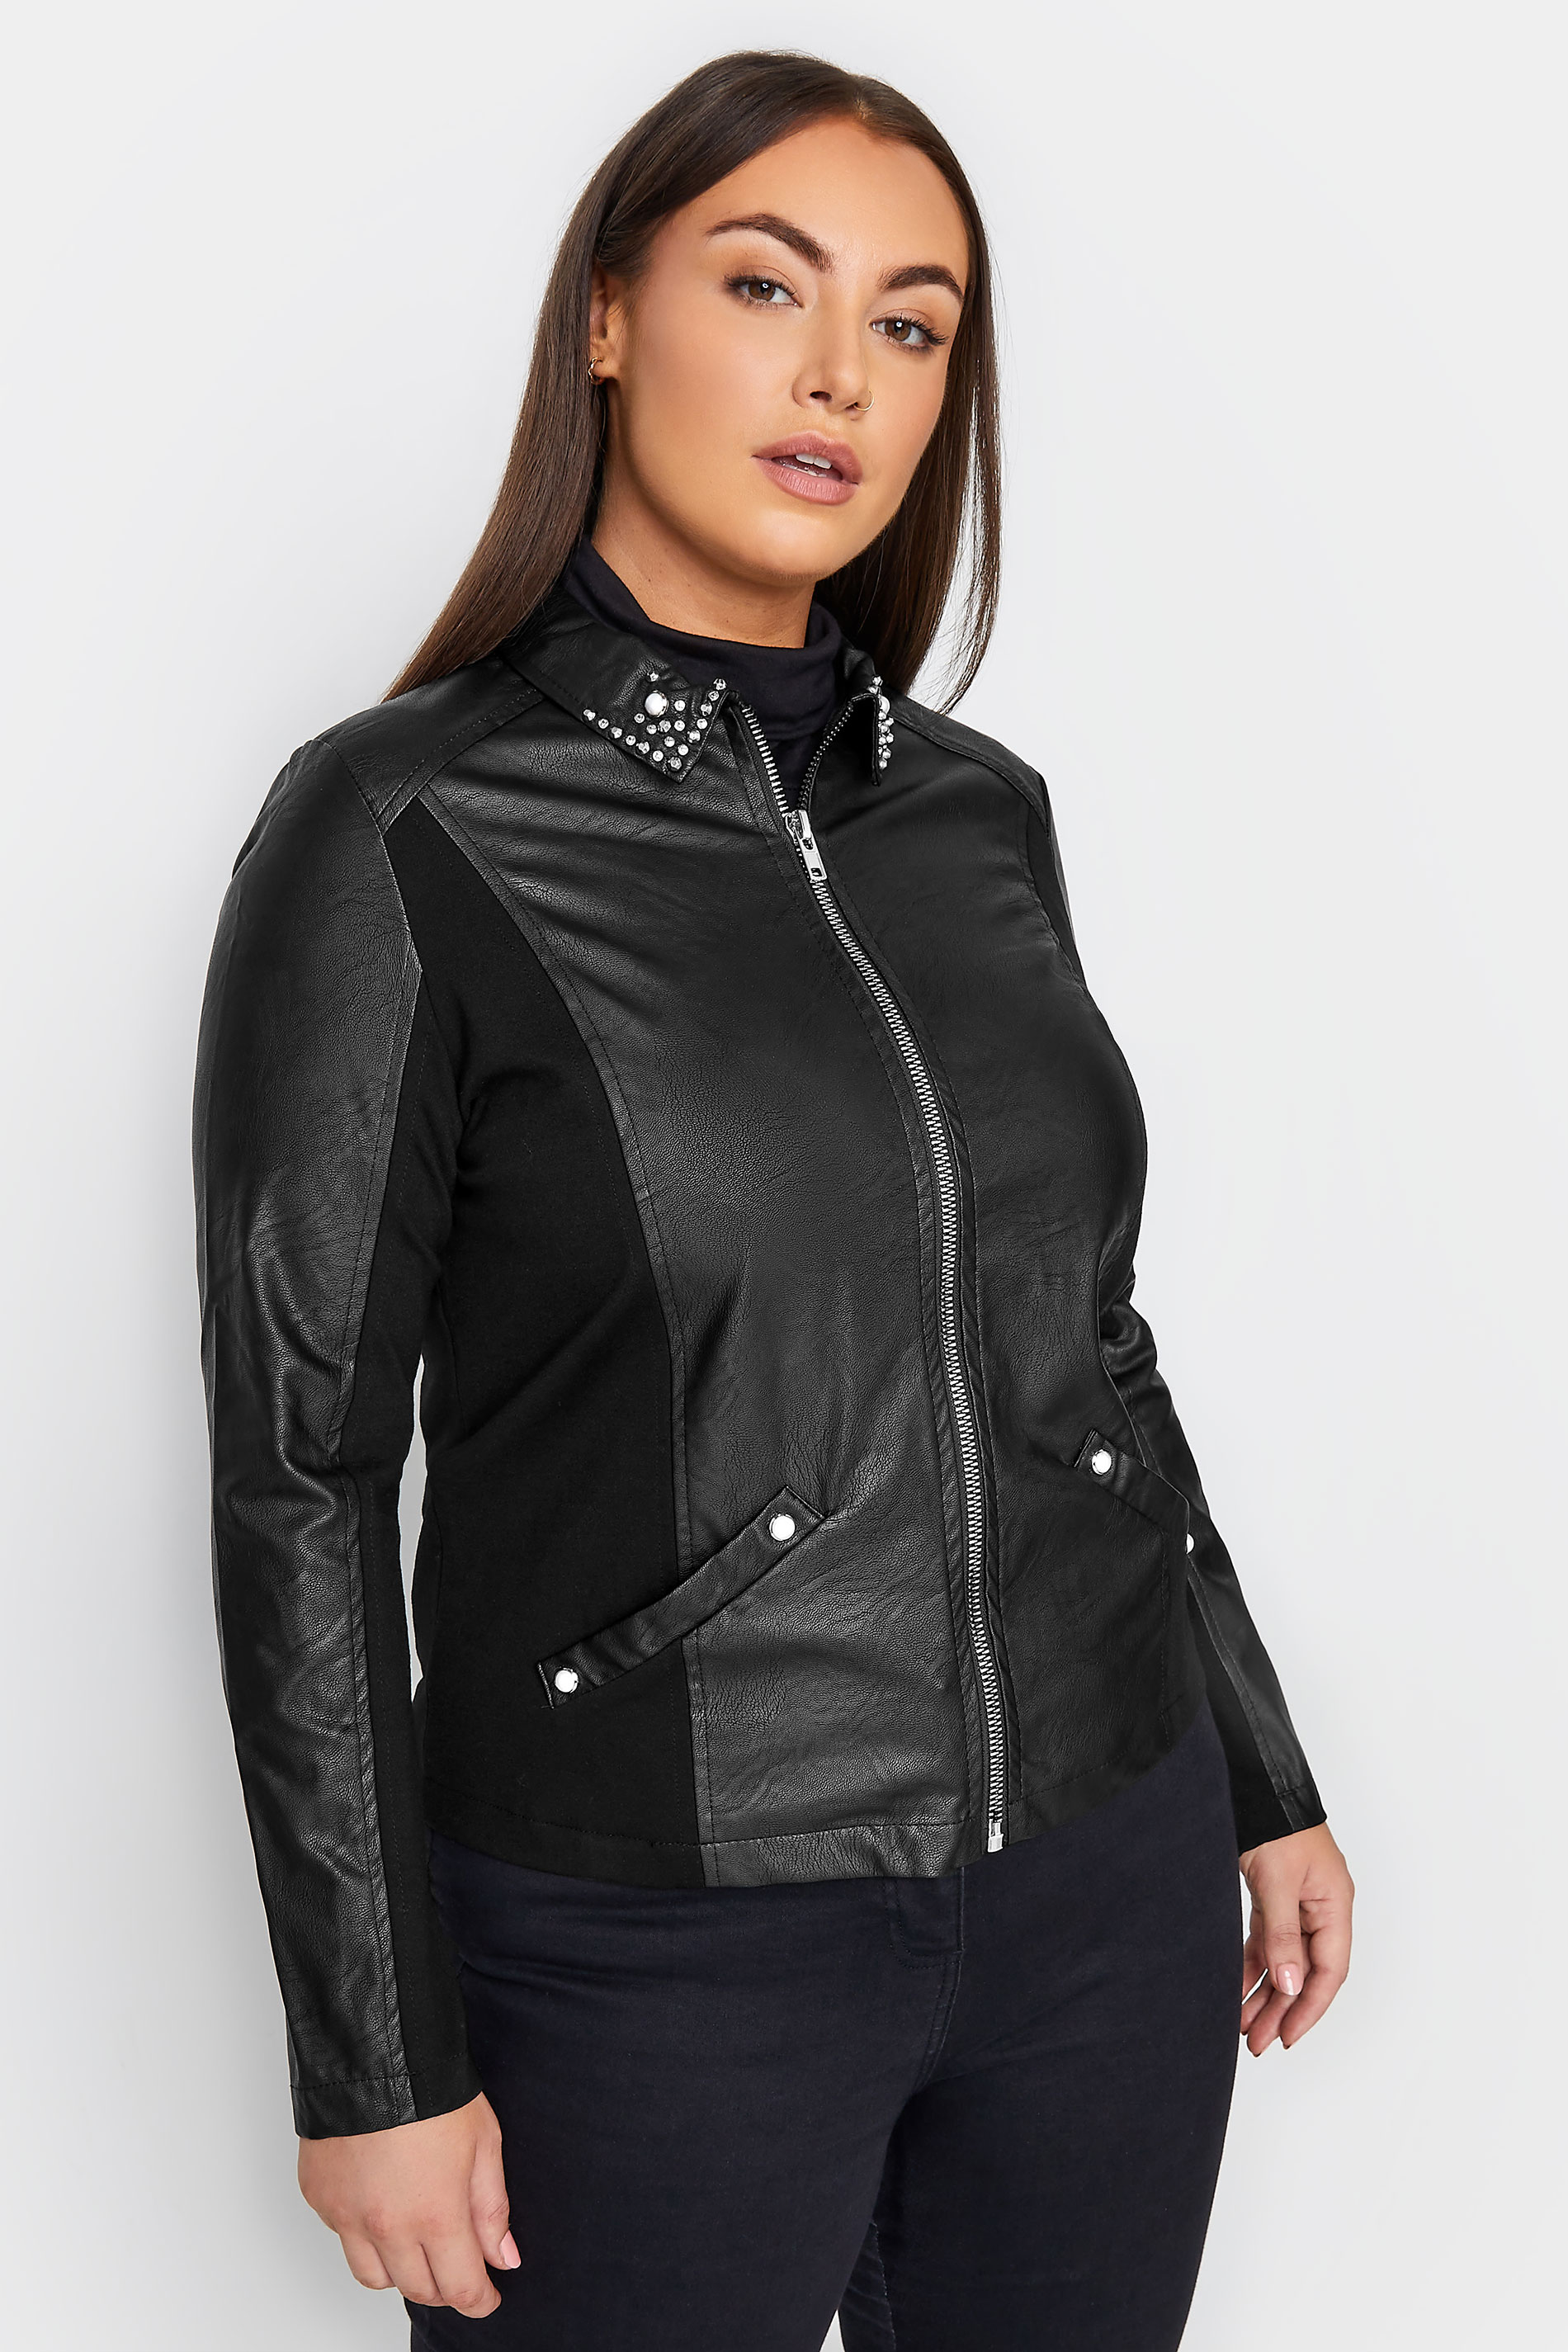 Manon Baptiste Black Embellished Faux Leather Jacket | Evans